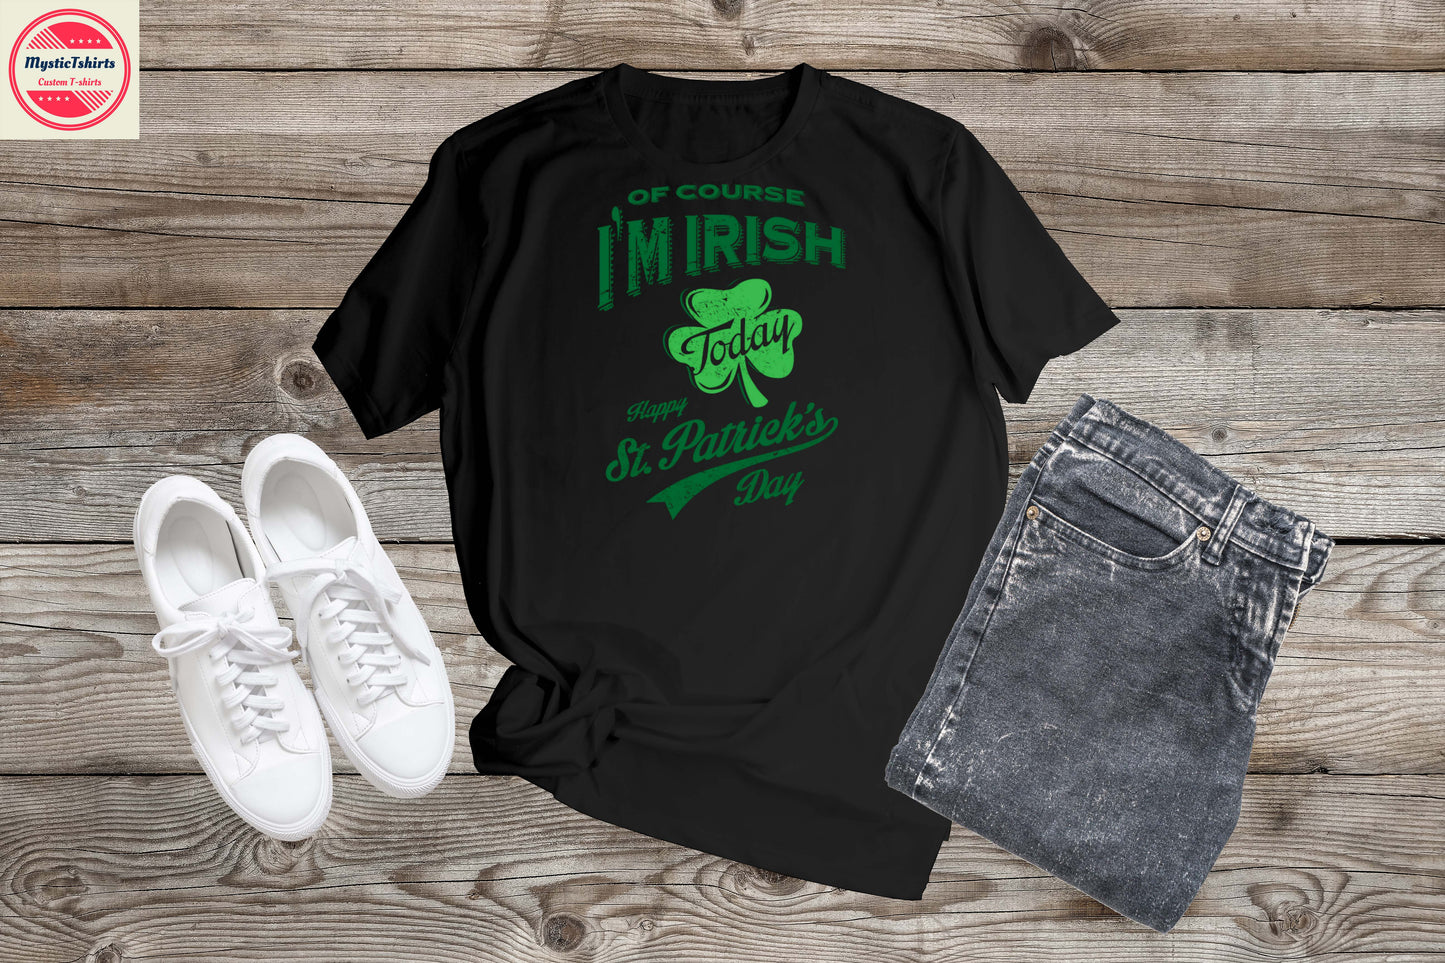 392. OF COURSE I'M IRISH TODAY, Custom Made Shirt, Personalized T-Shirt, Custom Text, Make Your Own Shirt, Custom Tee